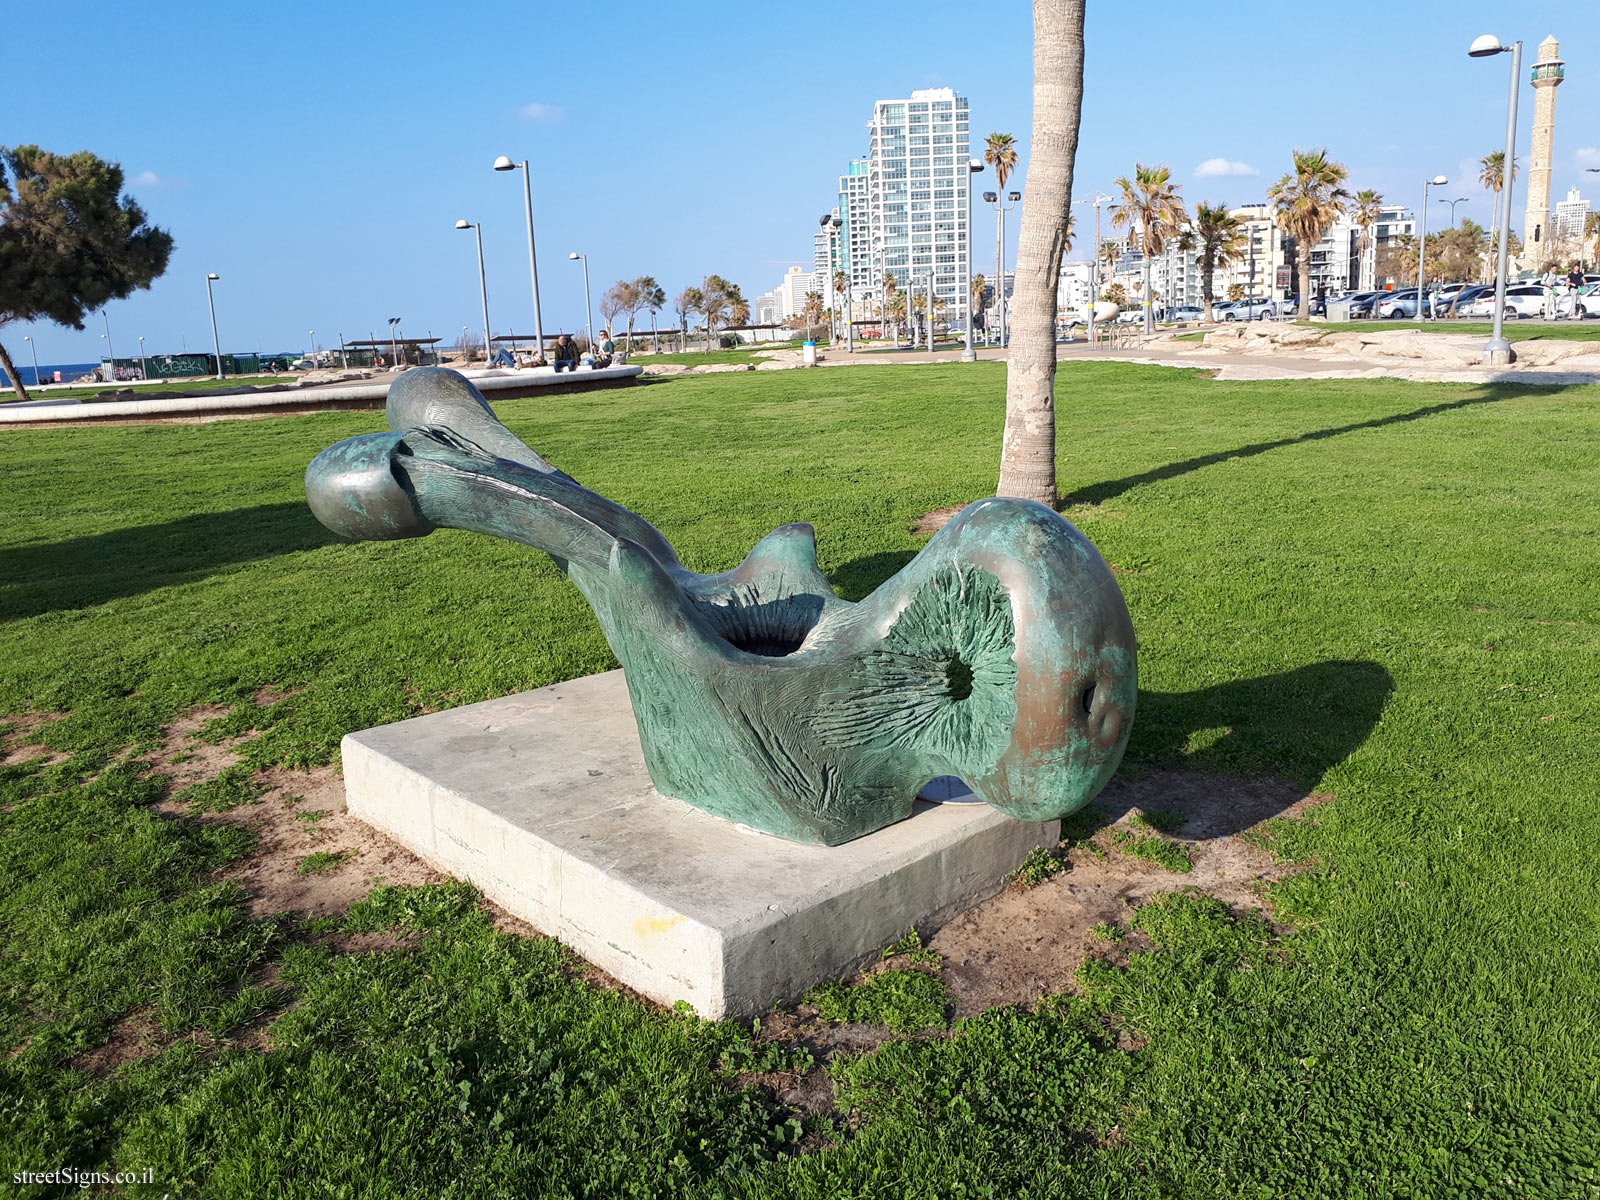 Tel Aviv - "Sacrifice" - Outdoor sculpture by Eli Ilan - Charles Clore Garden